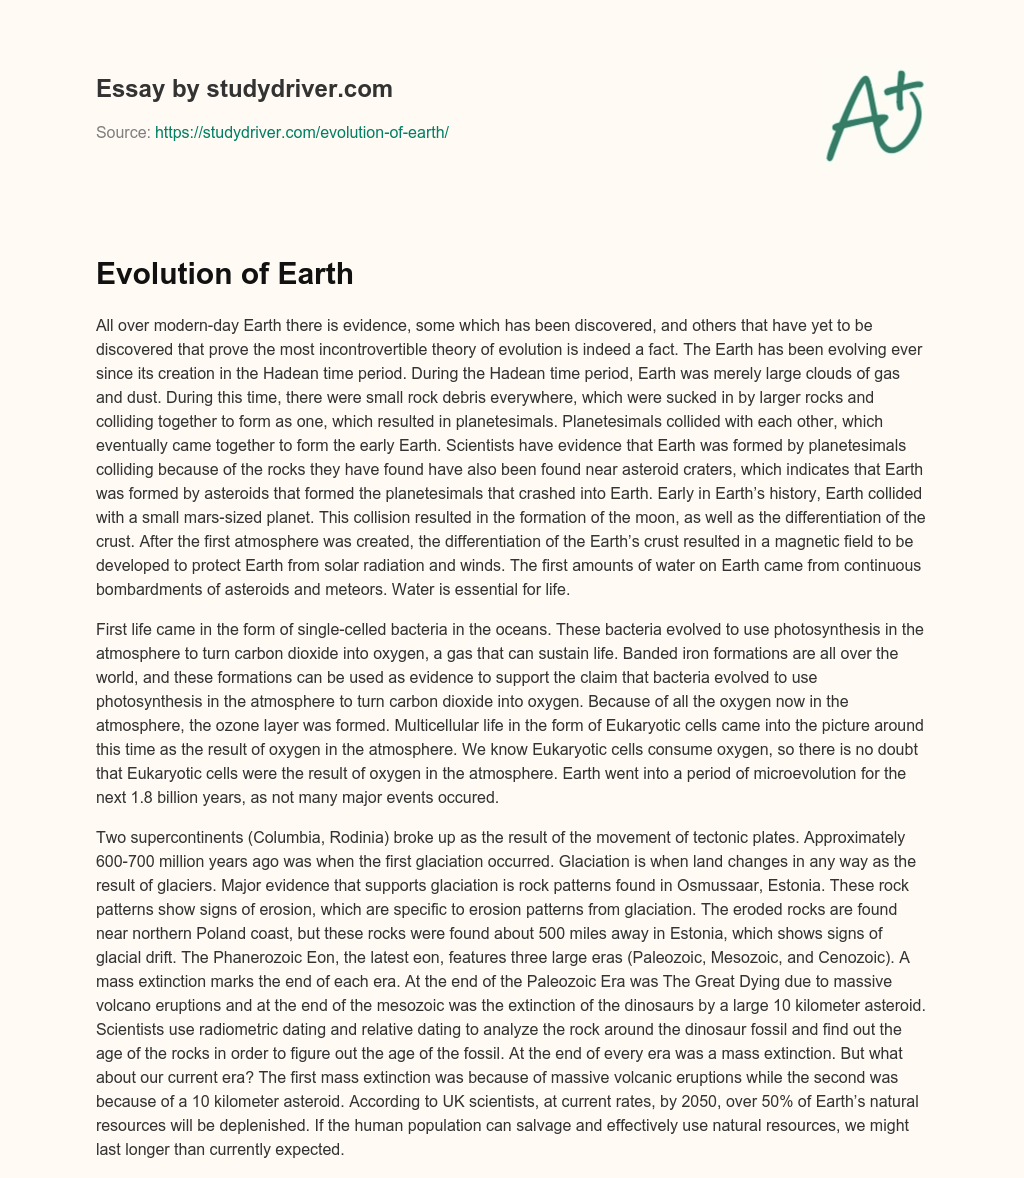 Evolution of Earth essay